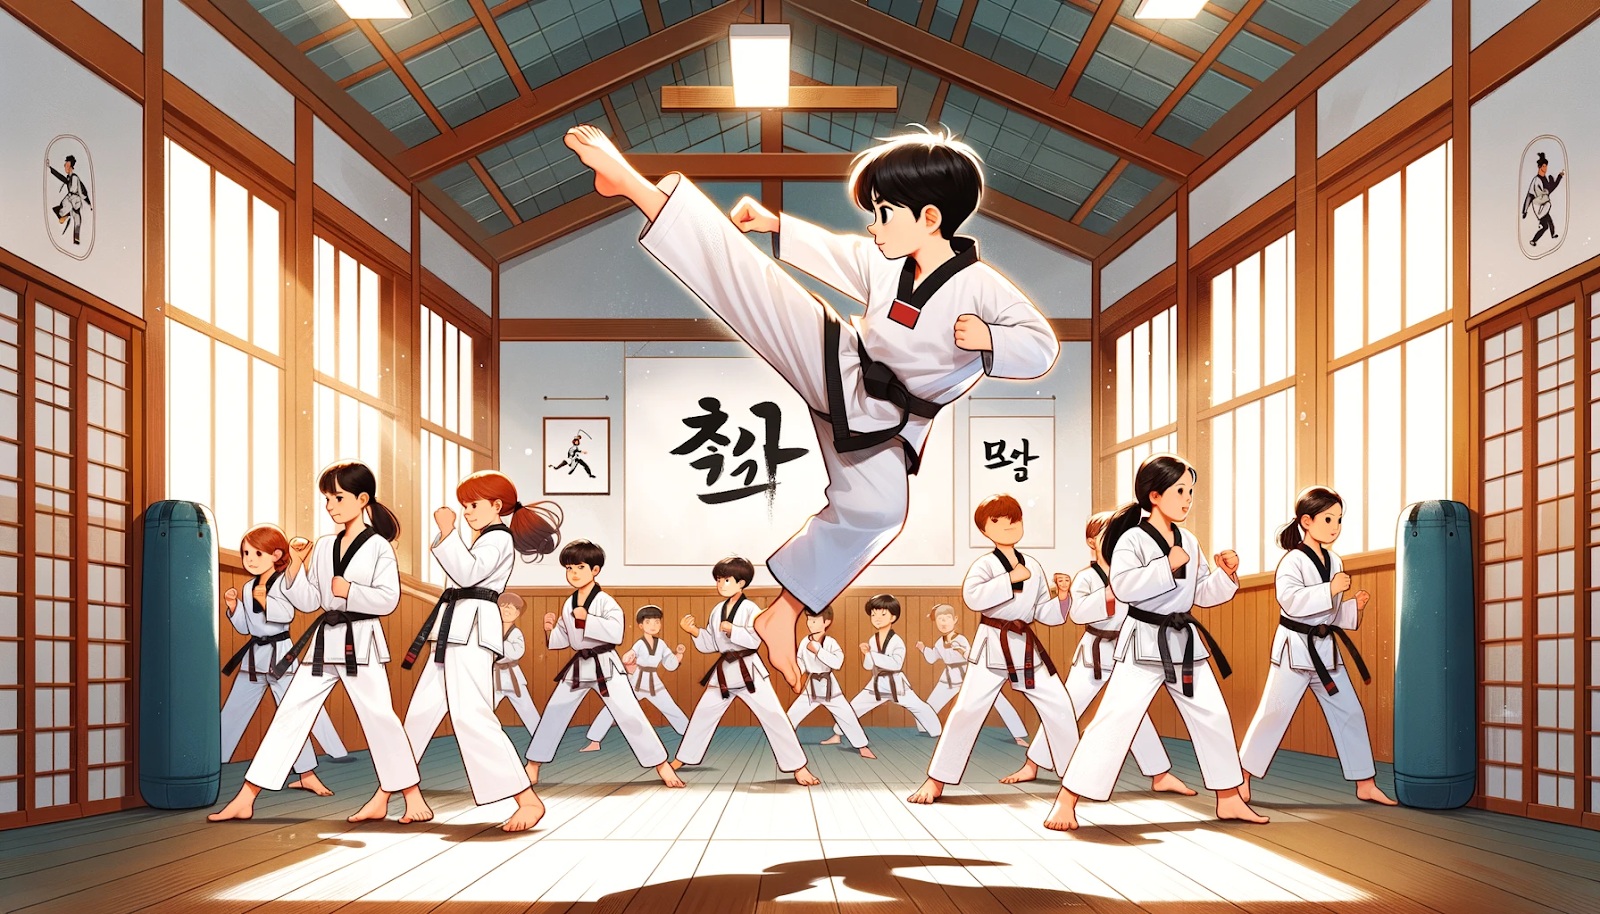 A group of students practicing Taekwondo